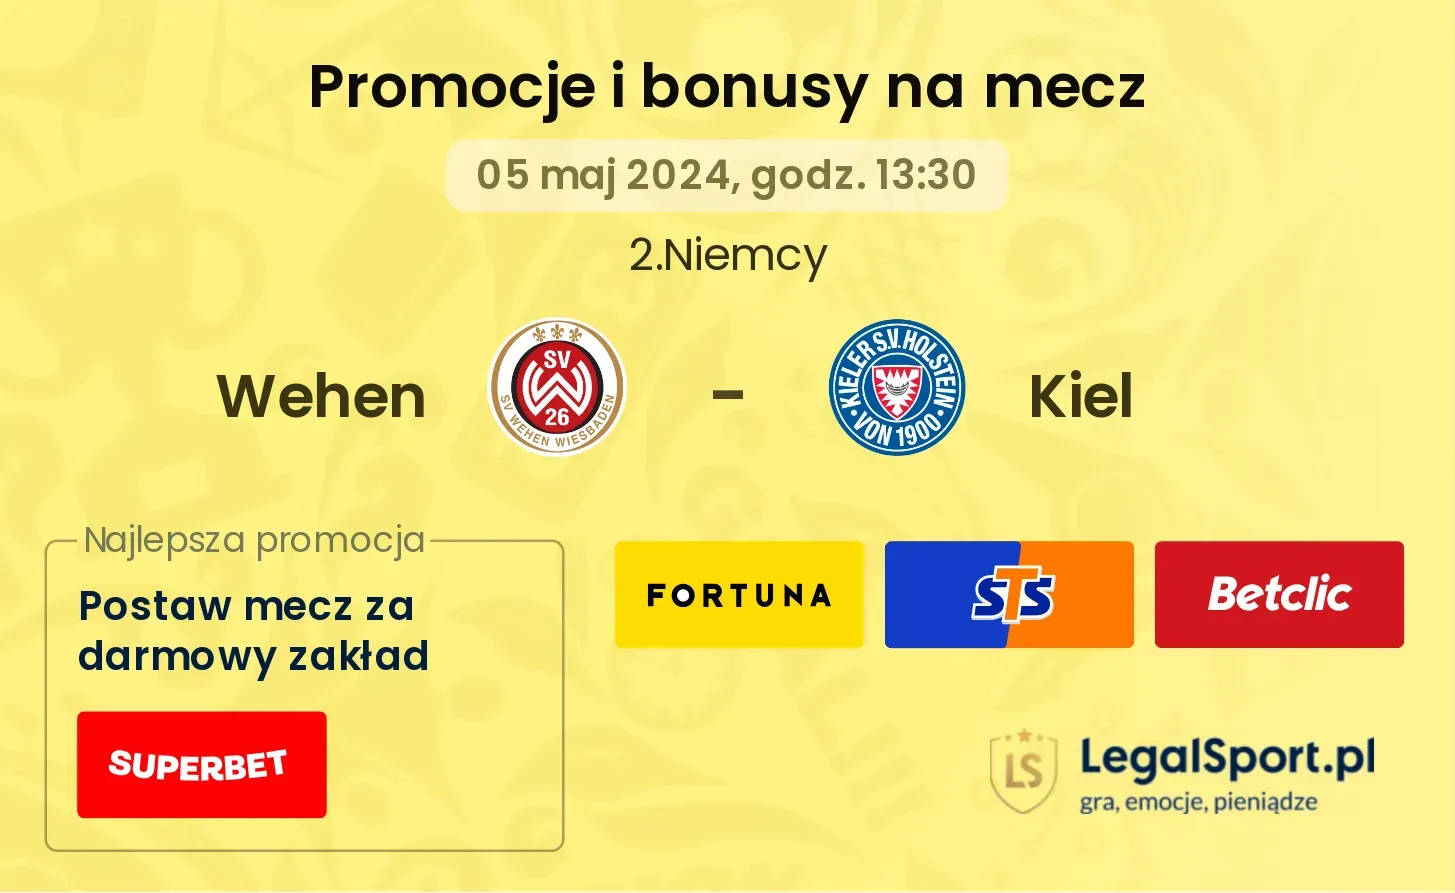 Wehen - Kiel promocje bonusy na mecz